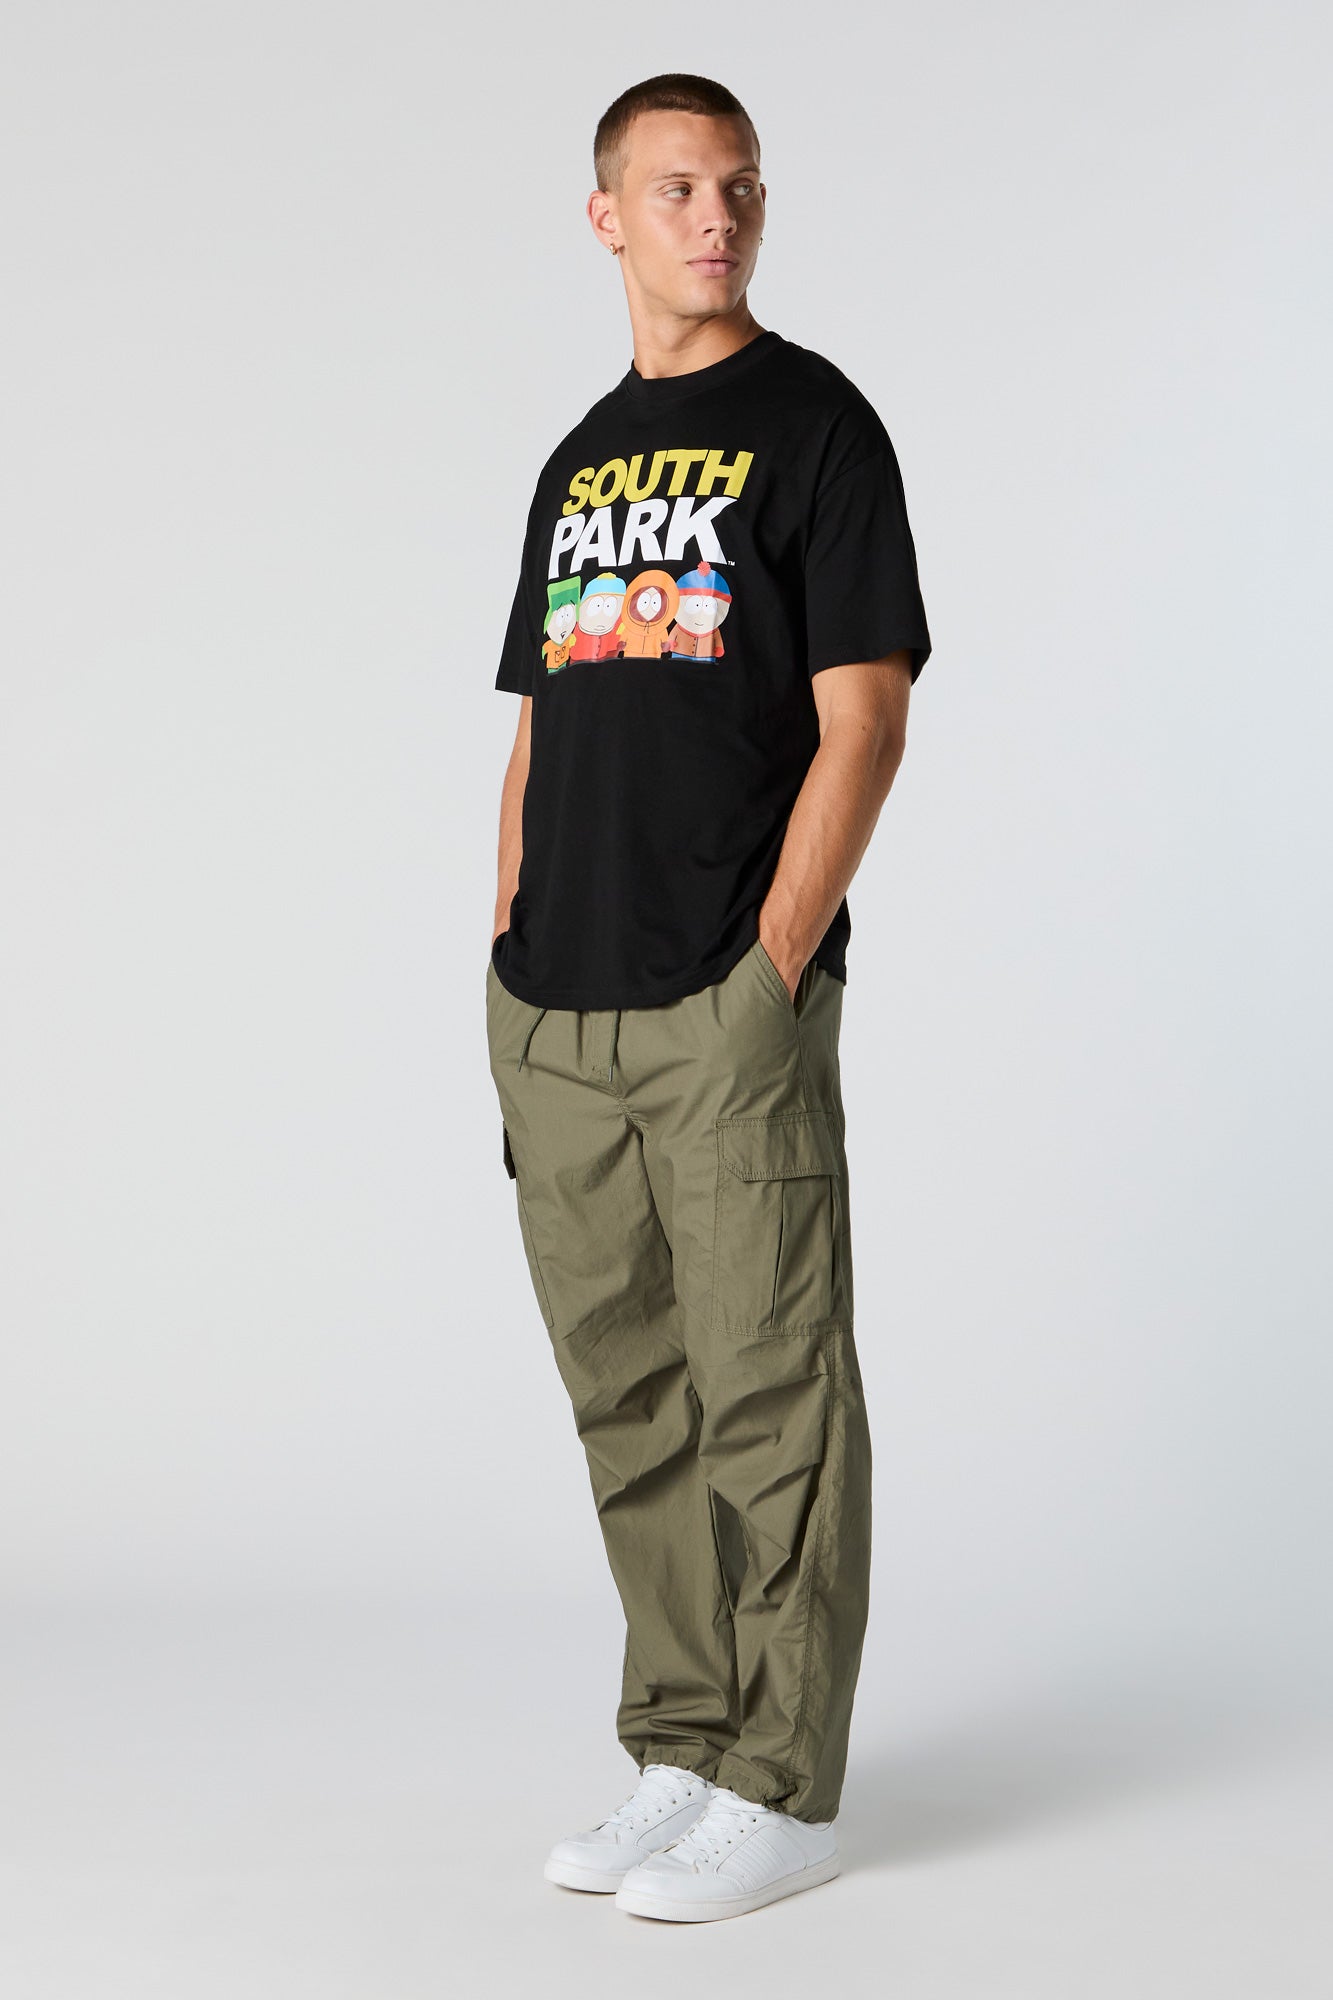 South Park Graphic T-Shirt